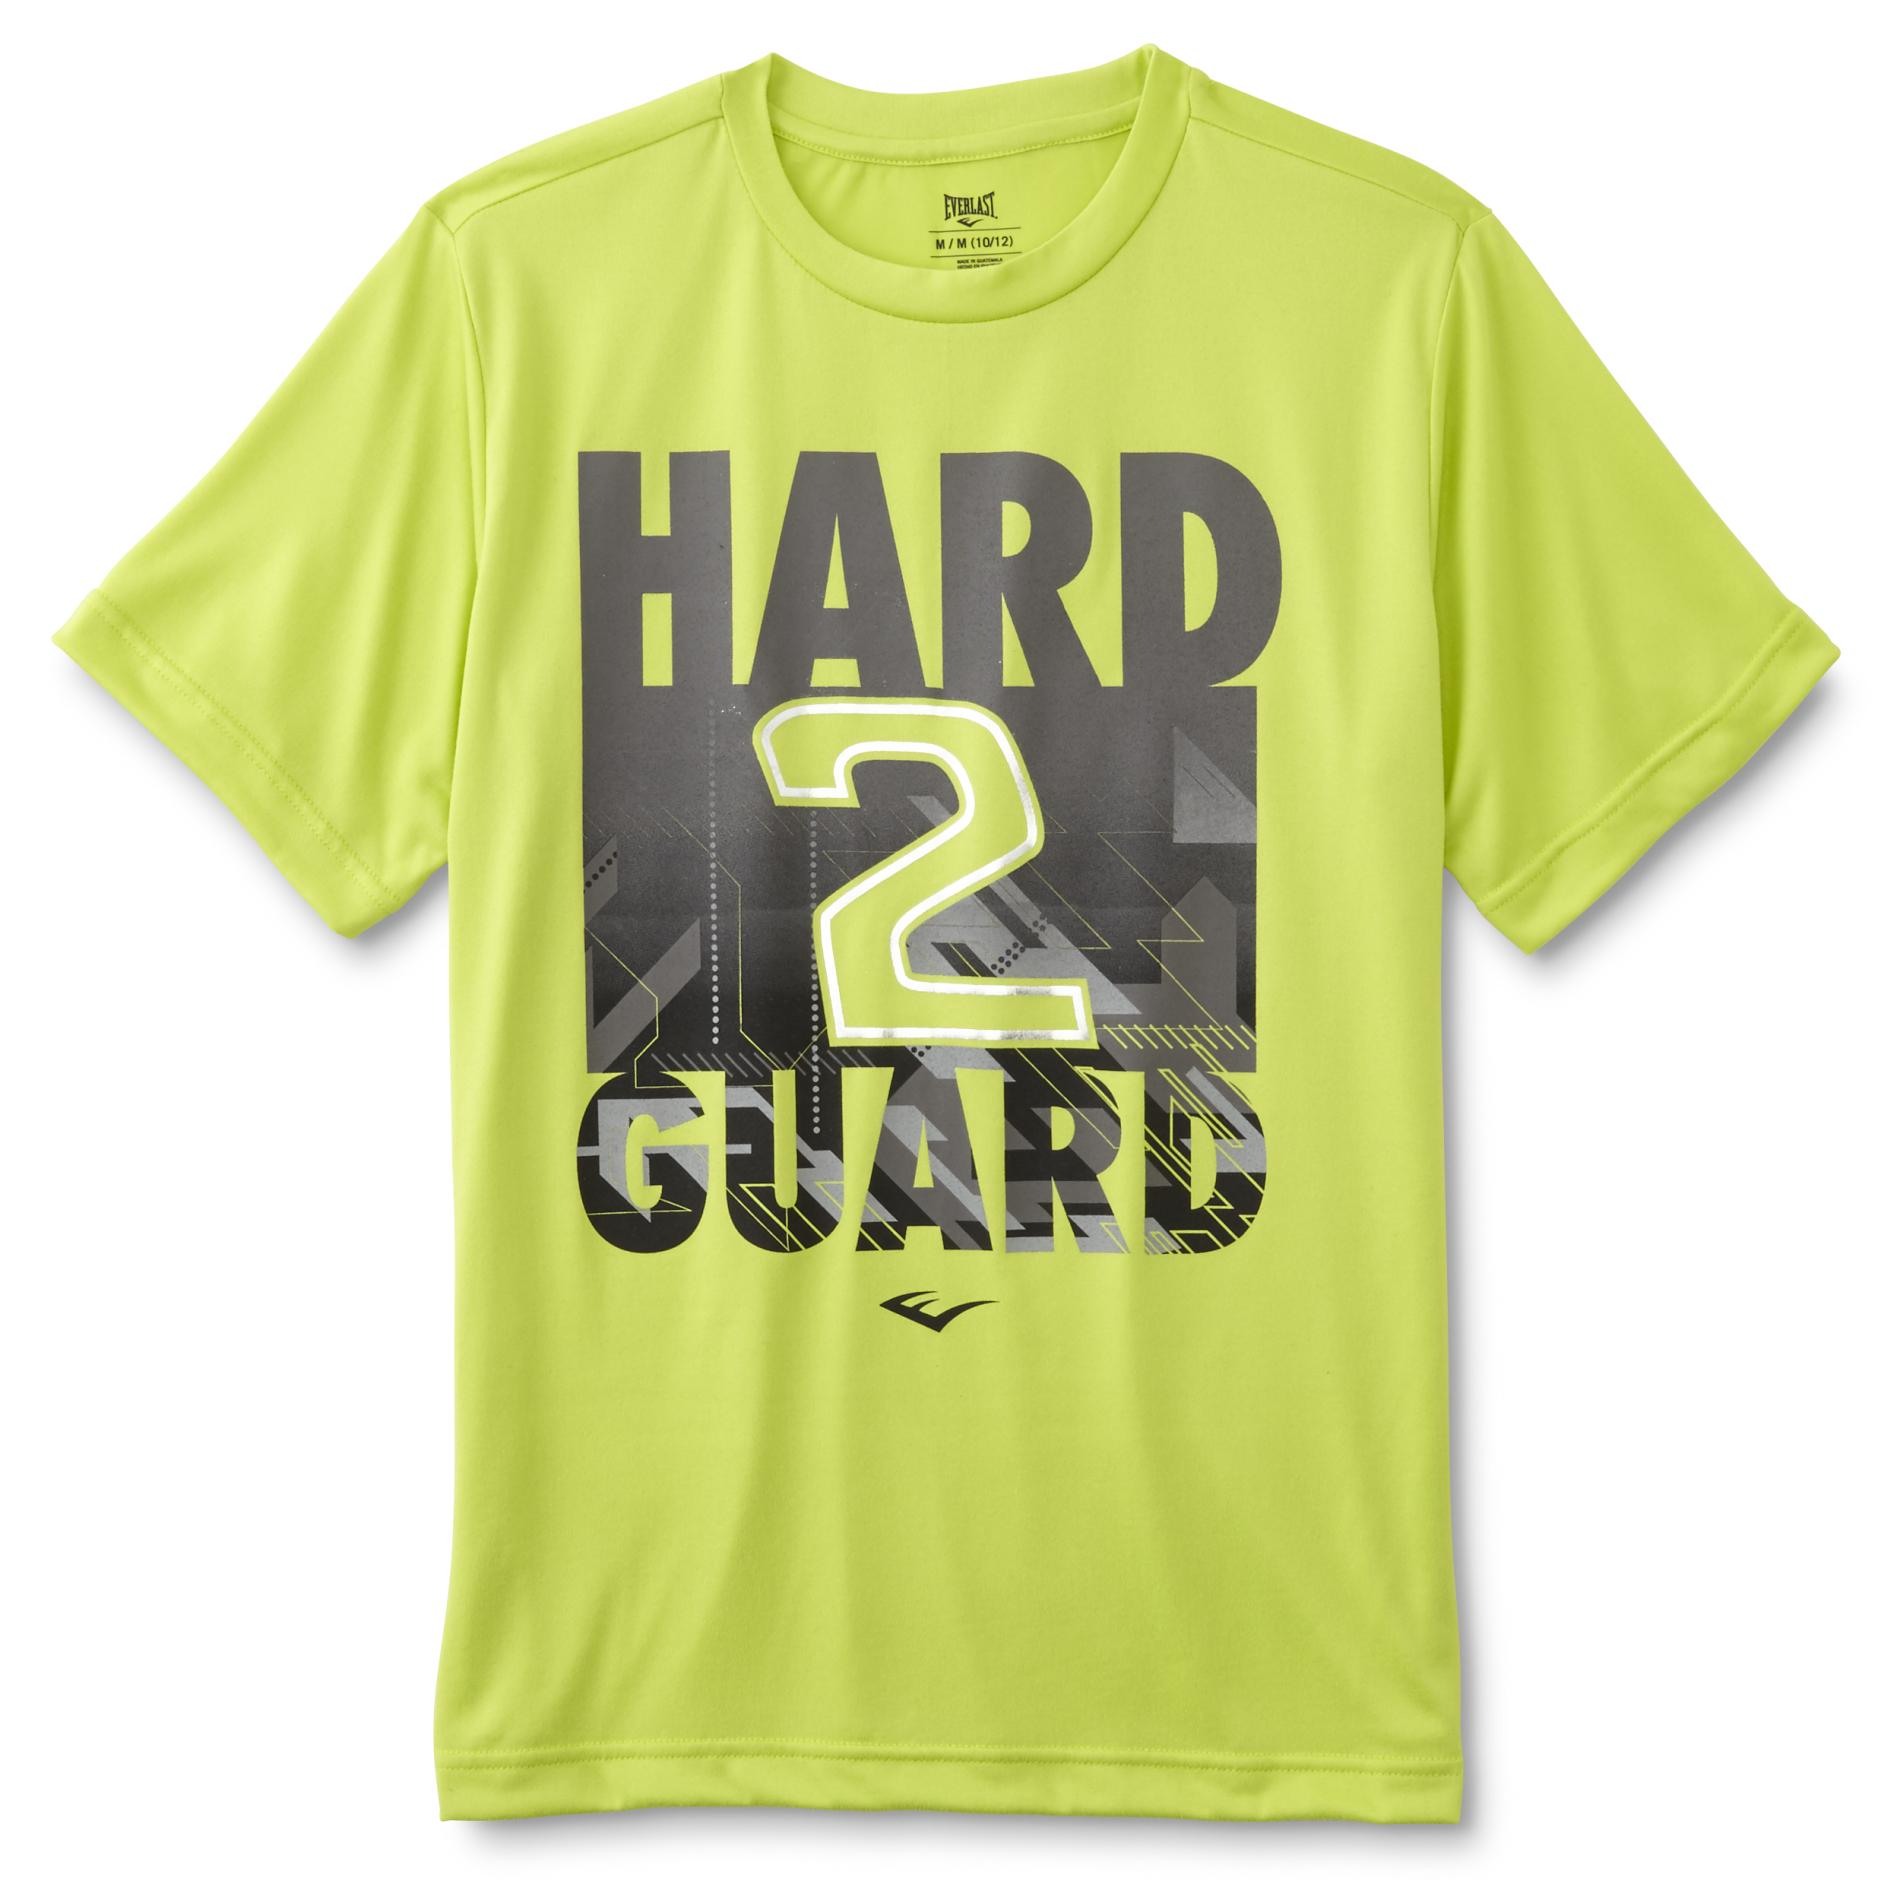 Everlast&reg; Boy's Graphic Athletic T-Shirt - Hard 2 Guard